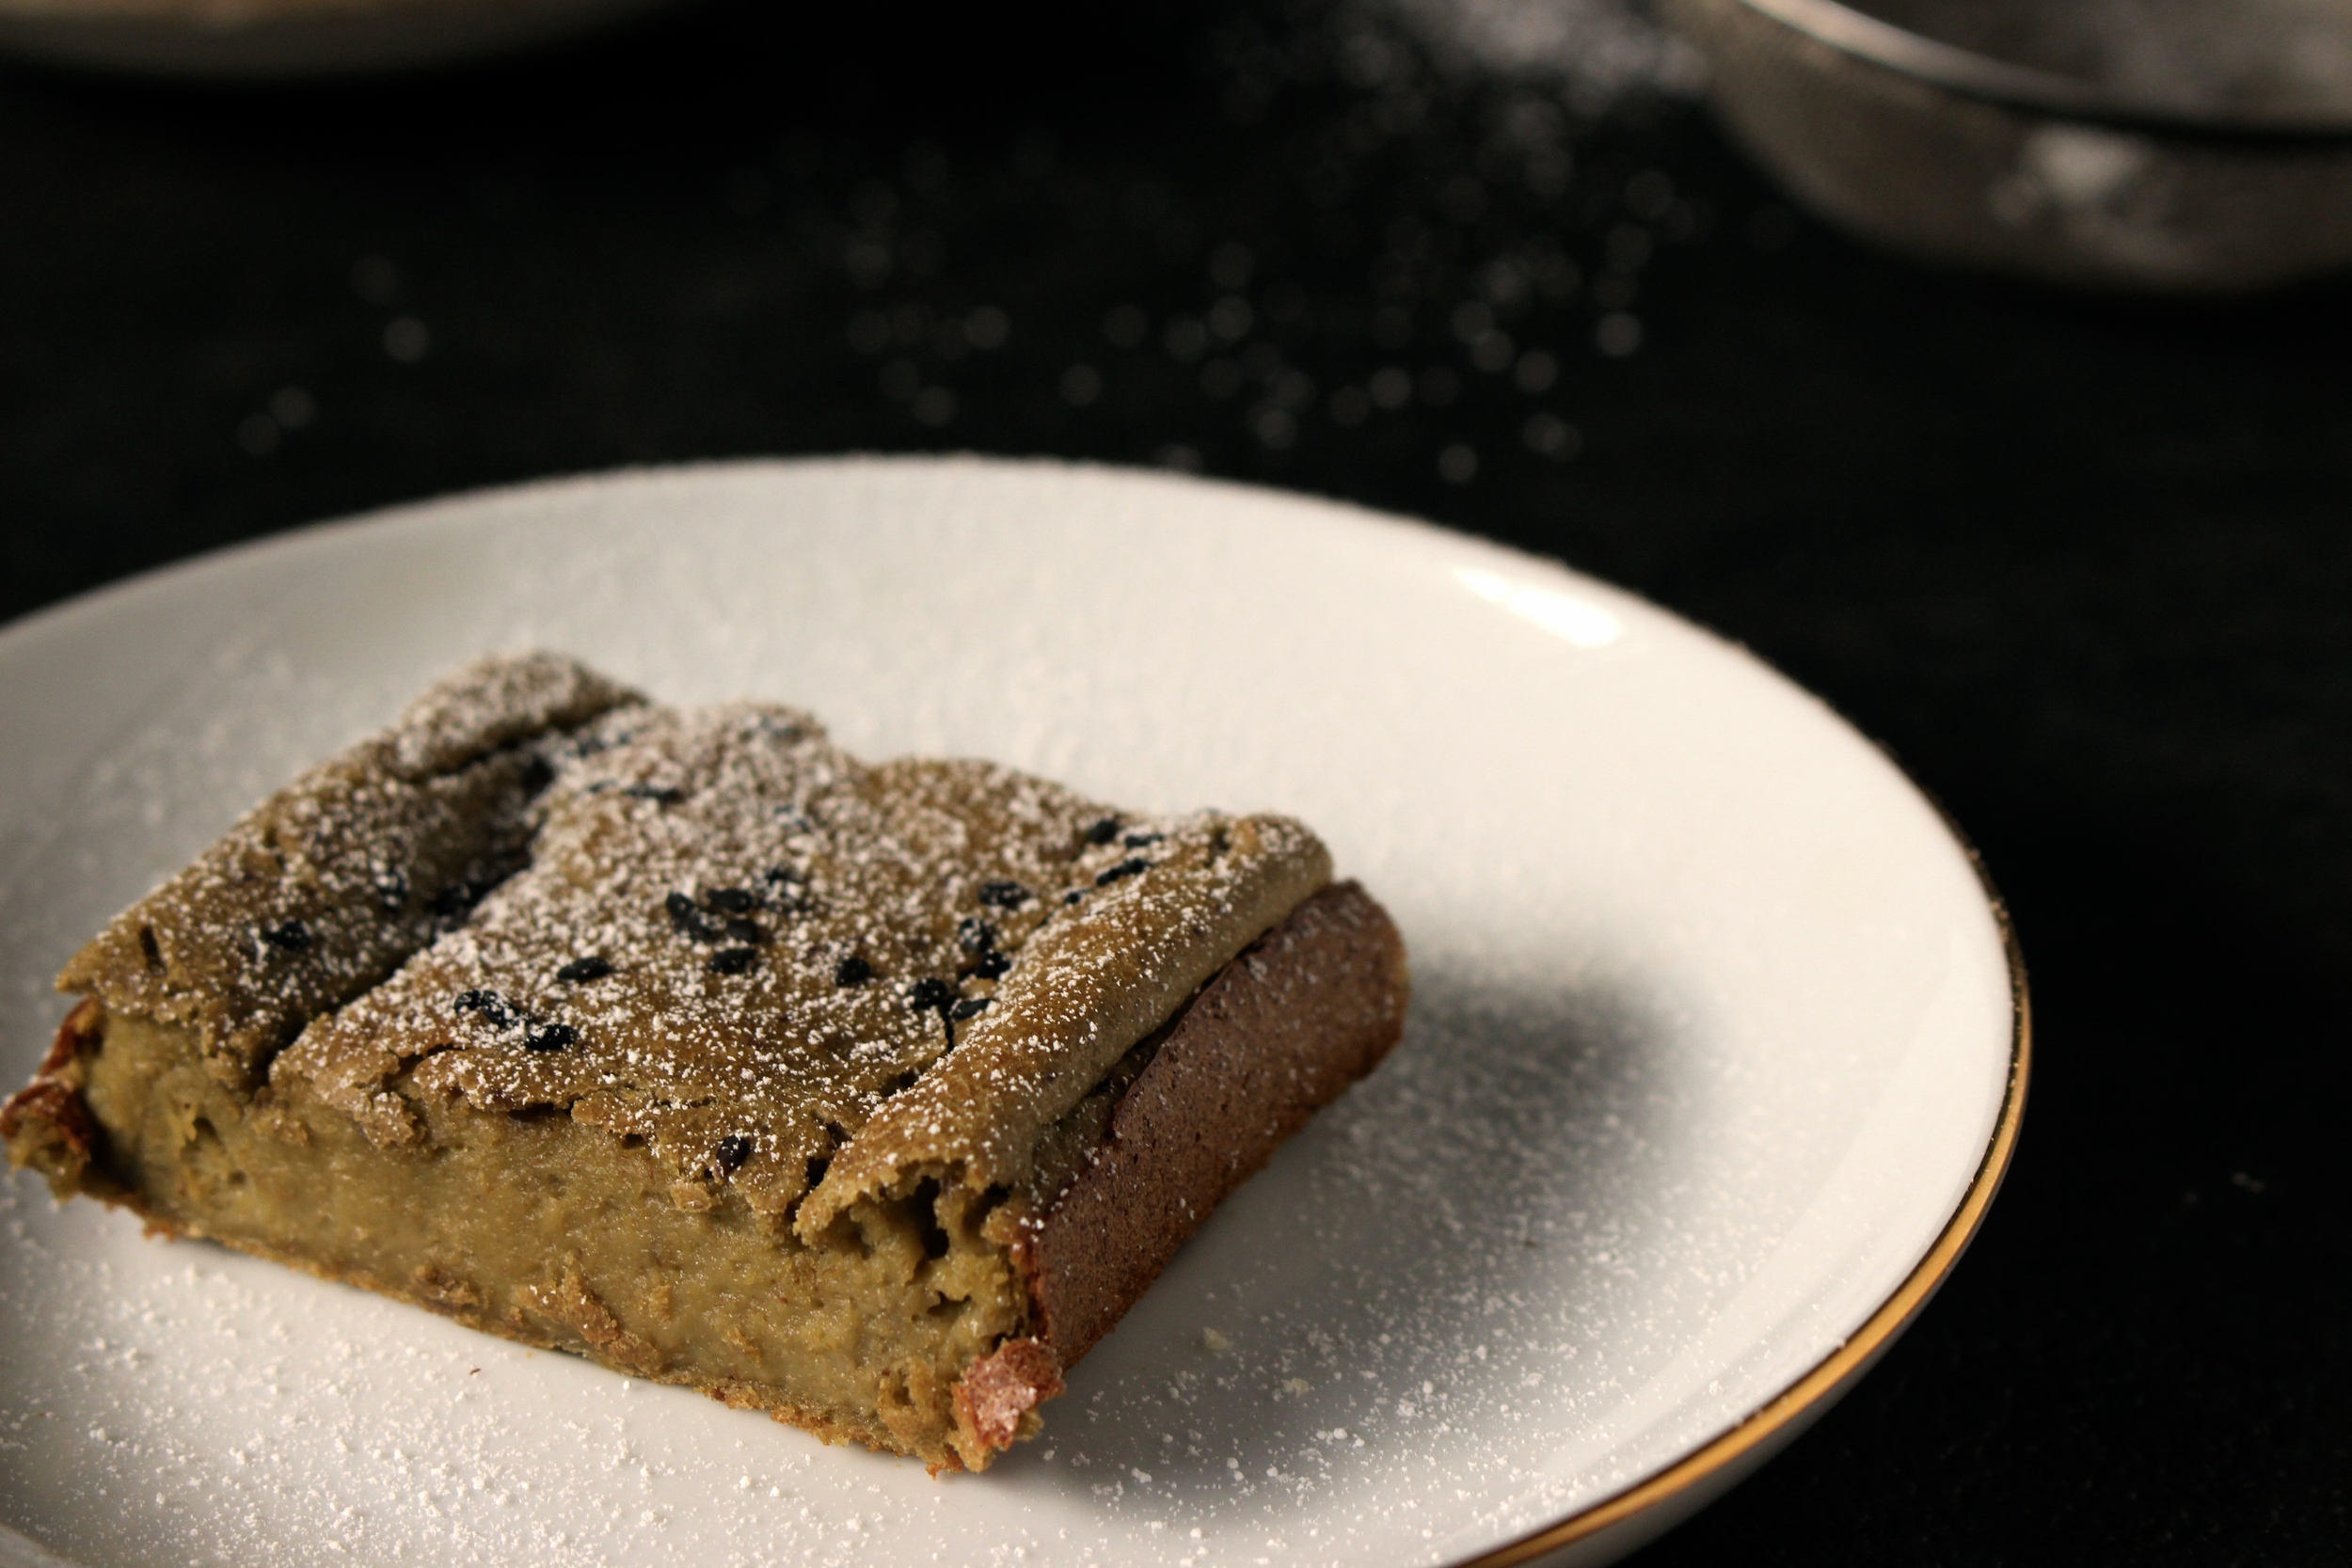 banana matcha green tea bread / pound cake [Vegan & gluten free recipe]